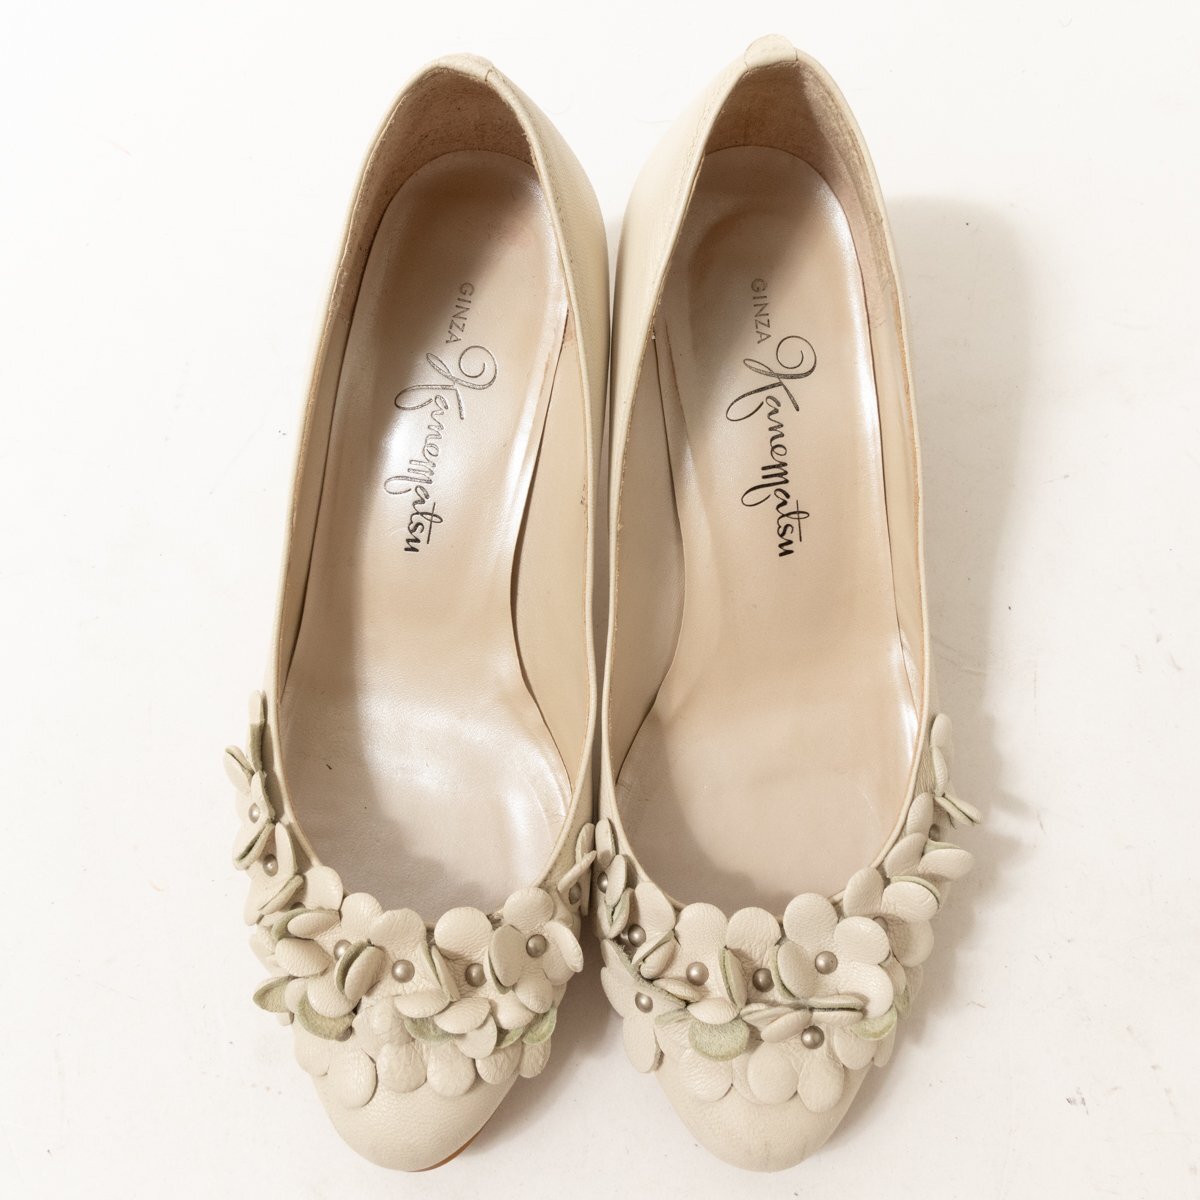  Ginza Kanematsu GINZA Kanematsu leather flower pumps low heel shoes shoes 22.5cm ivory series beautiful .femi person women's shoes 